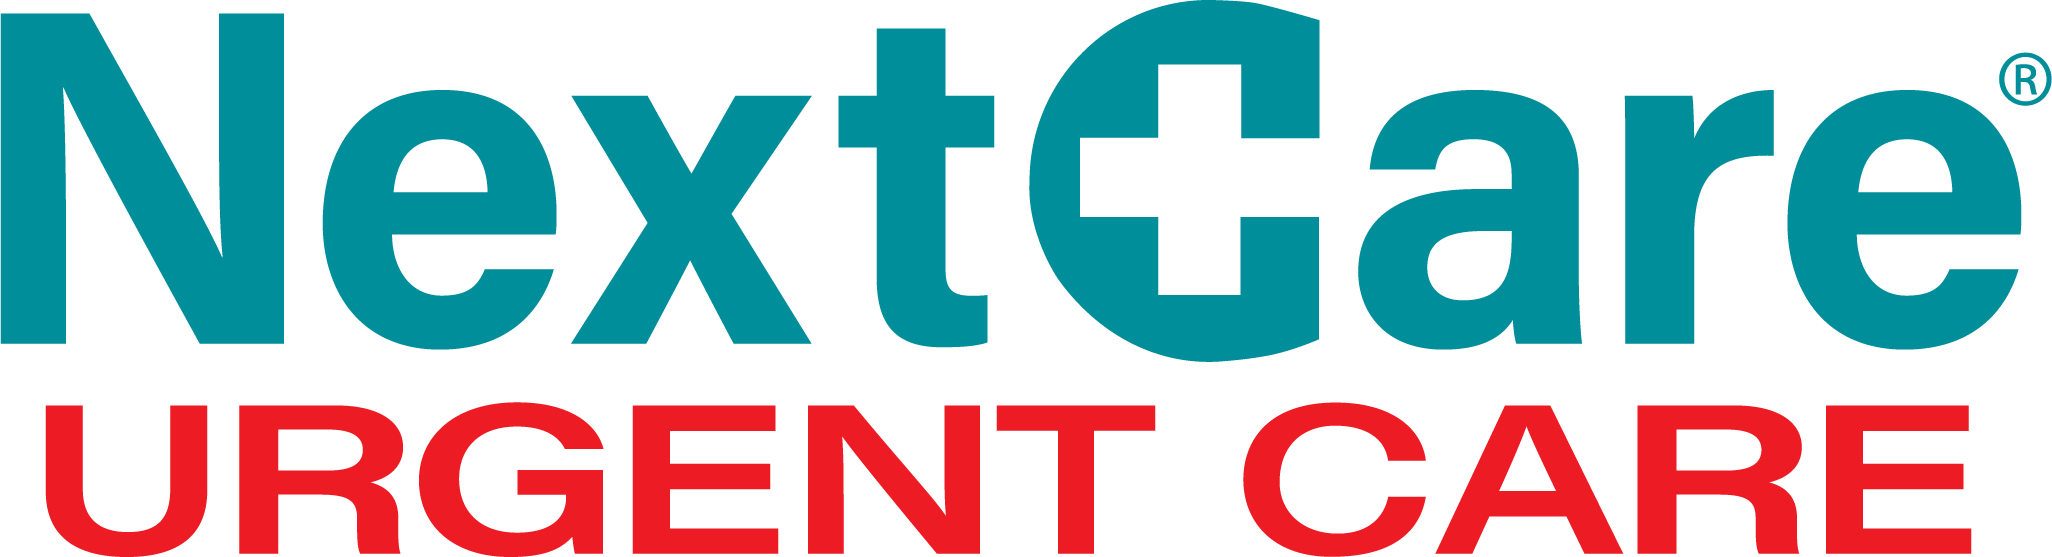 NextCare Urgent Care - Camelback Logo